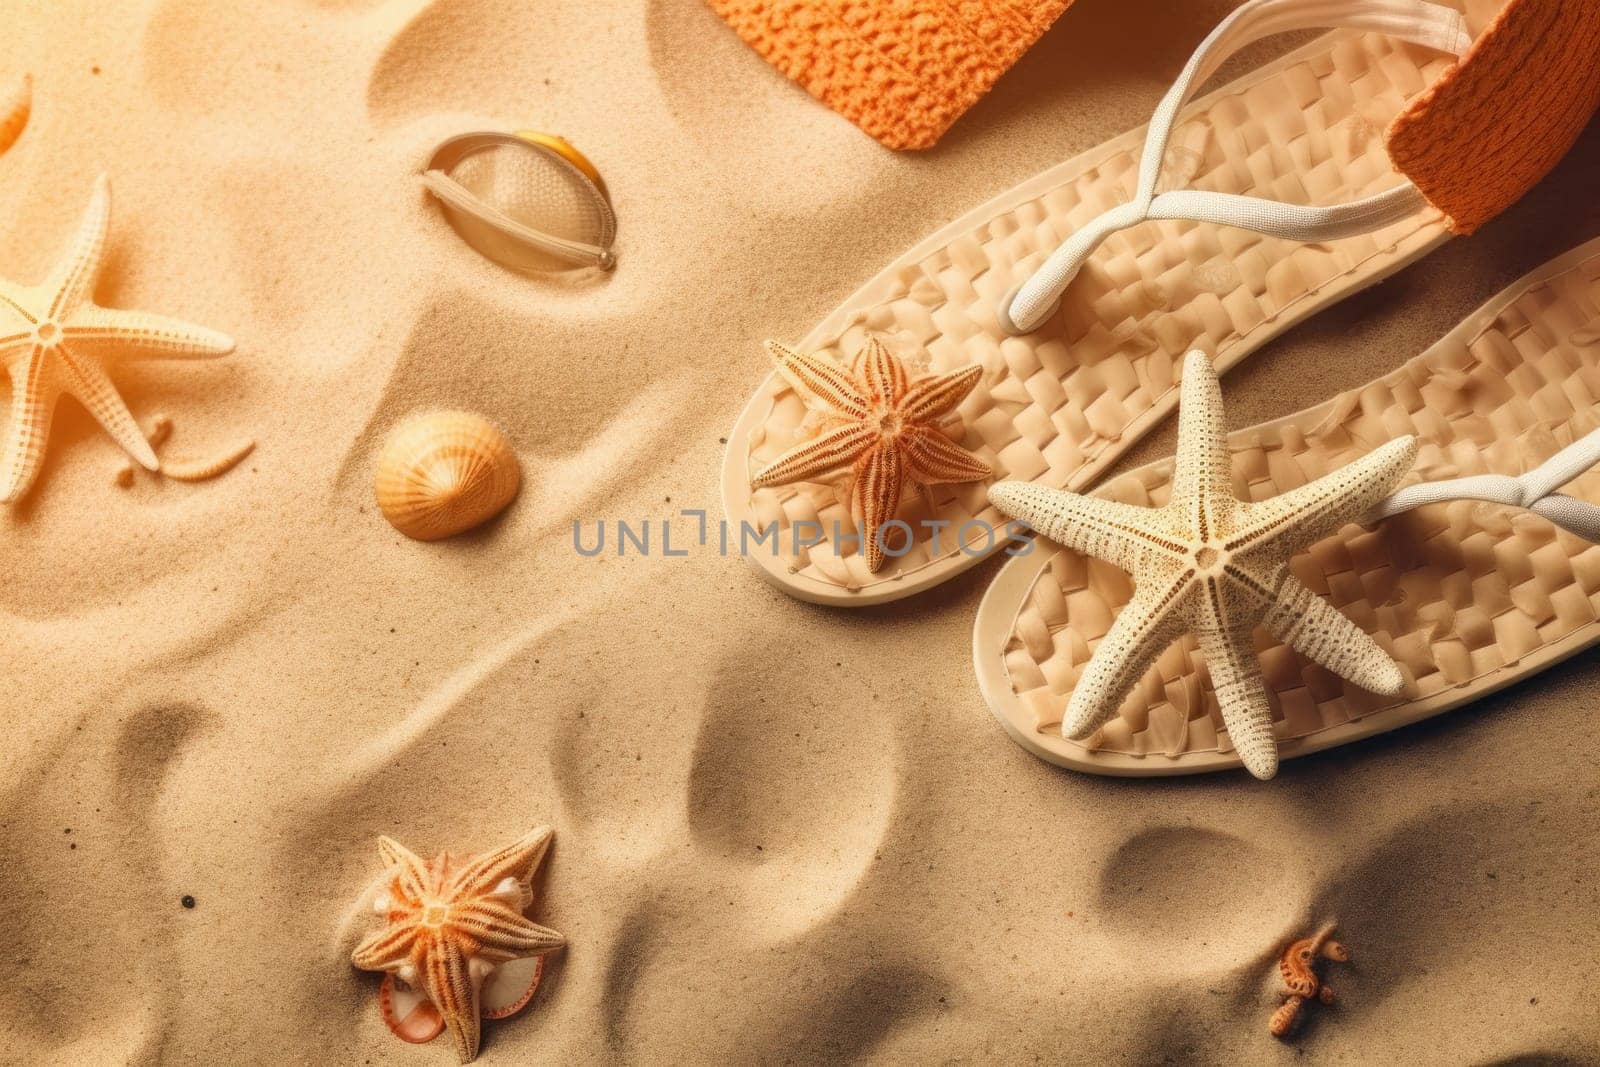 Coastal escape still life with seashells, starfish, and a hat on a sandy beach by Sorapop